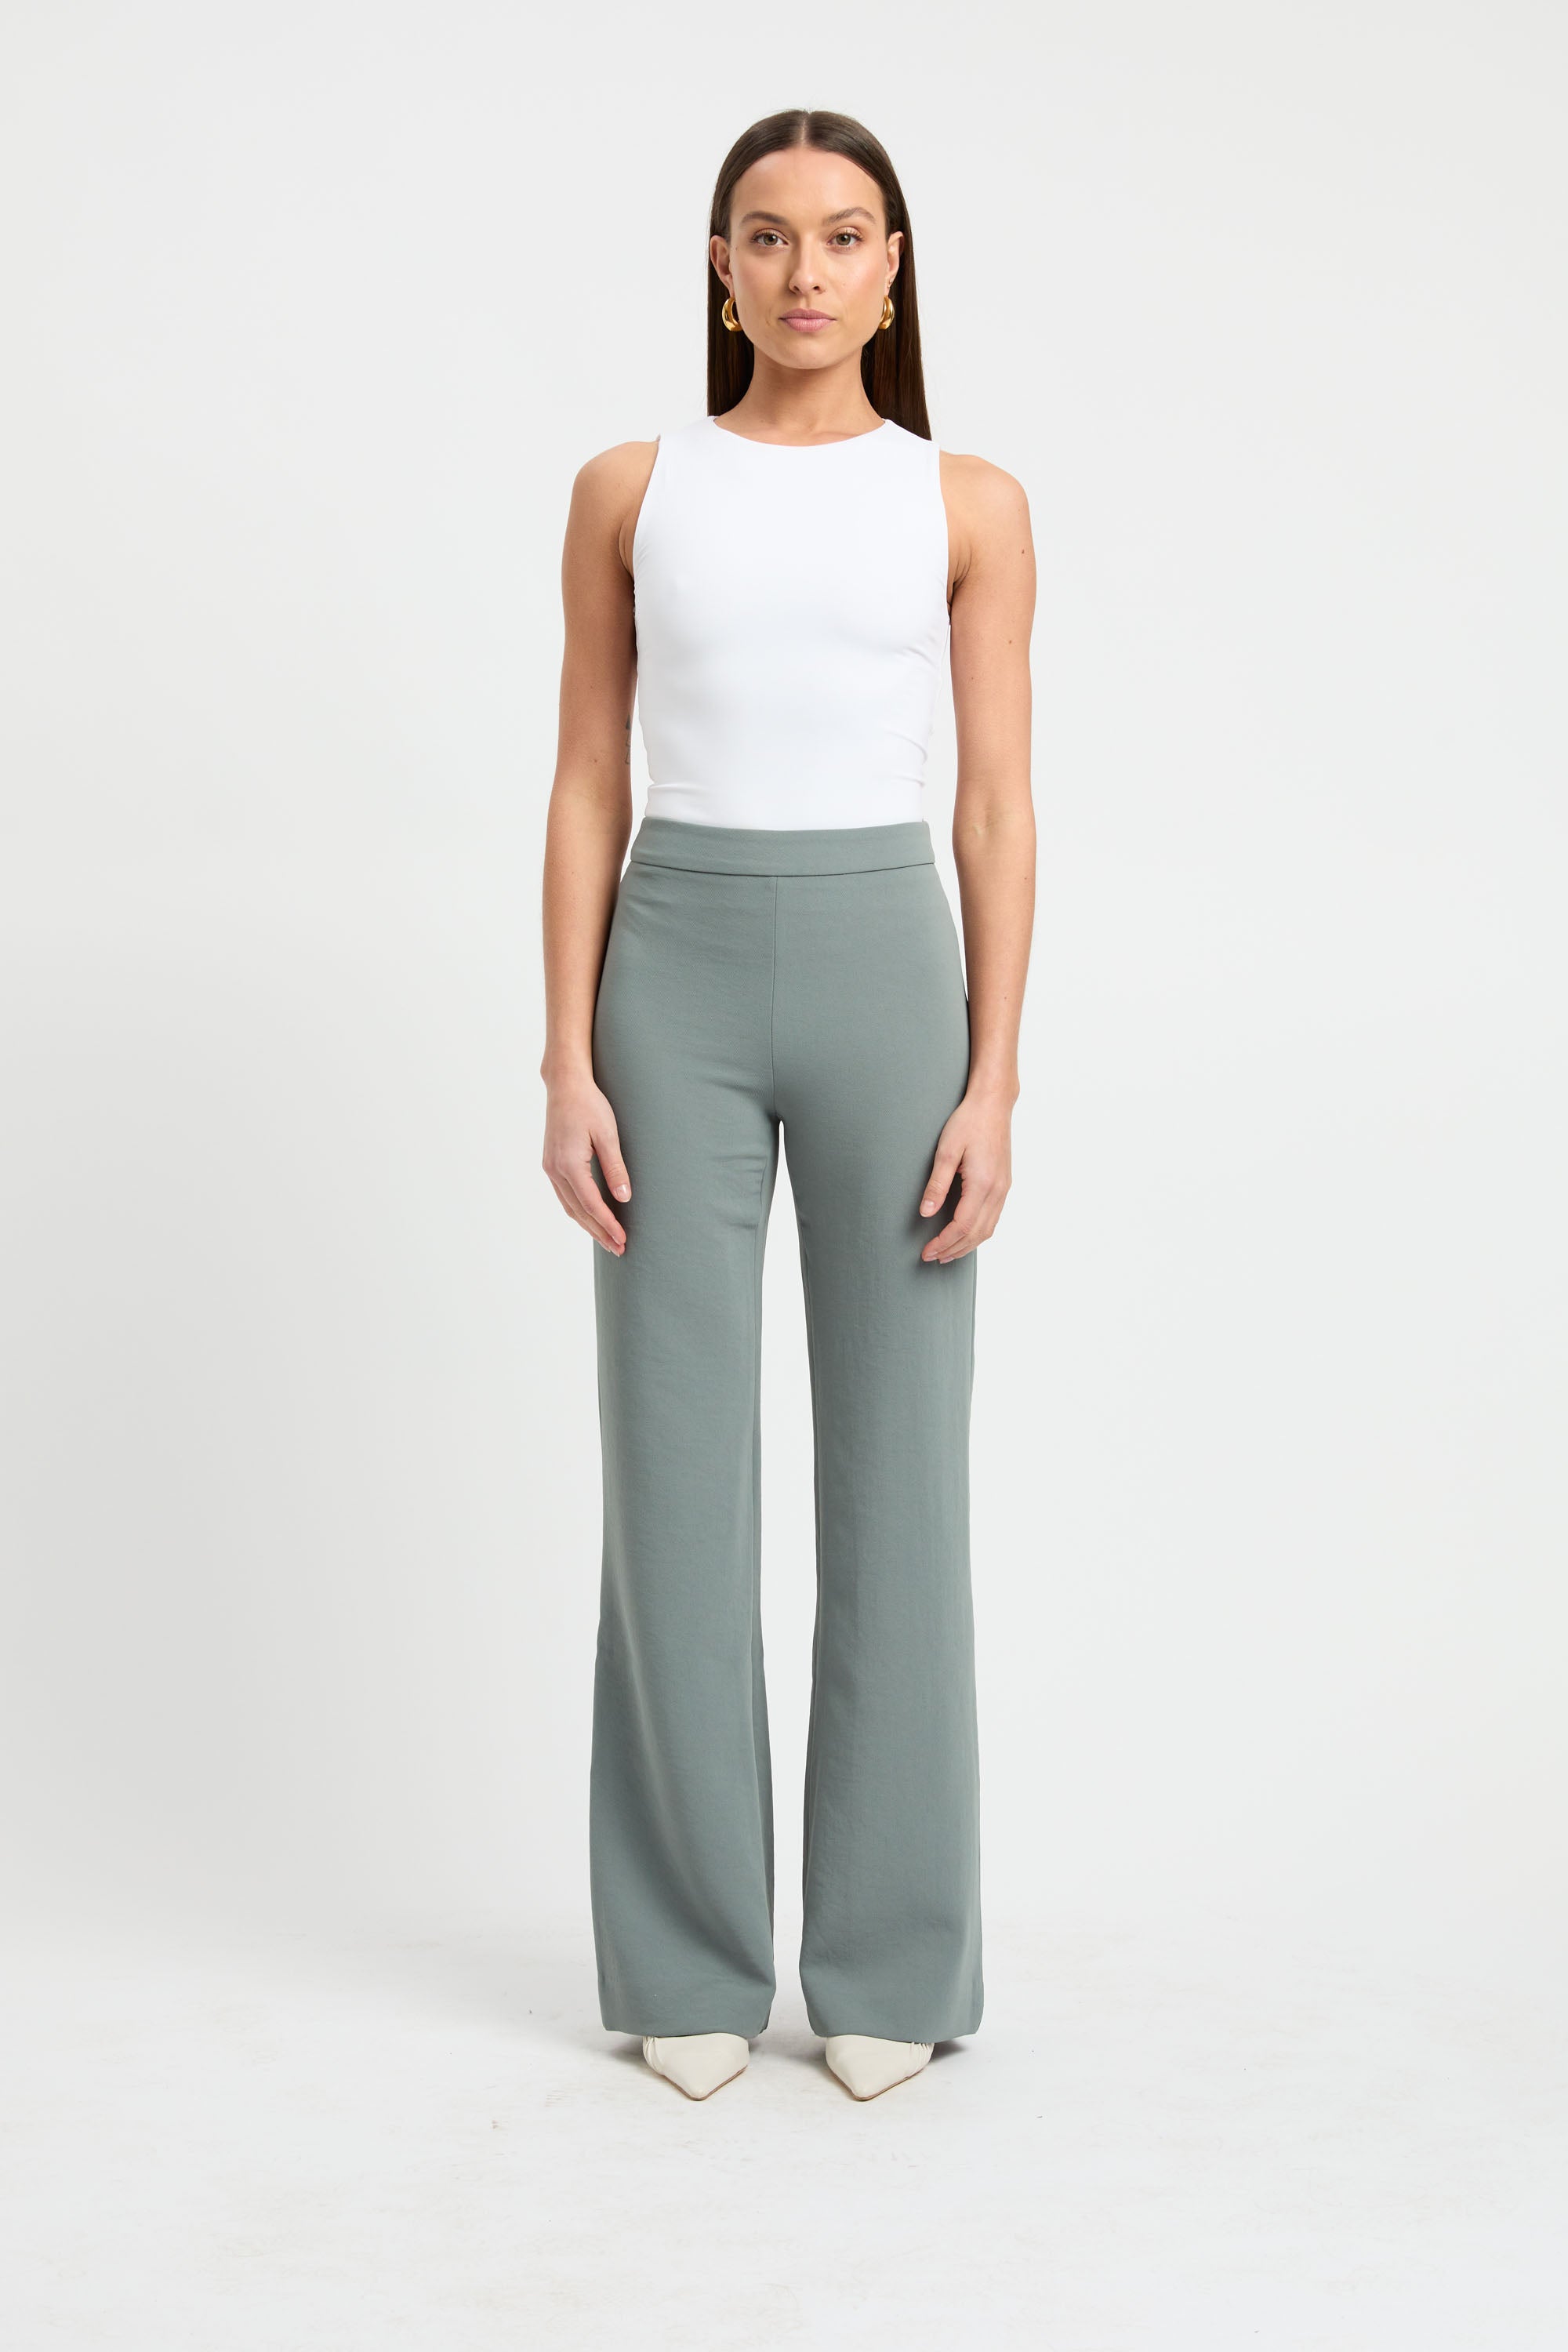 Green Faux Suede Flare Trousers - Beatrice von Tresckow Designs